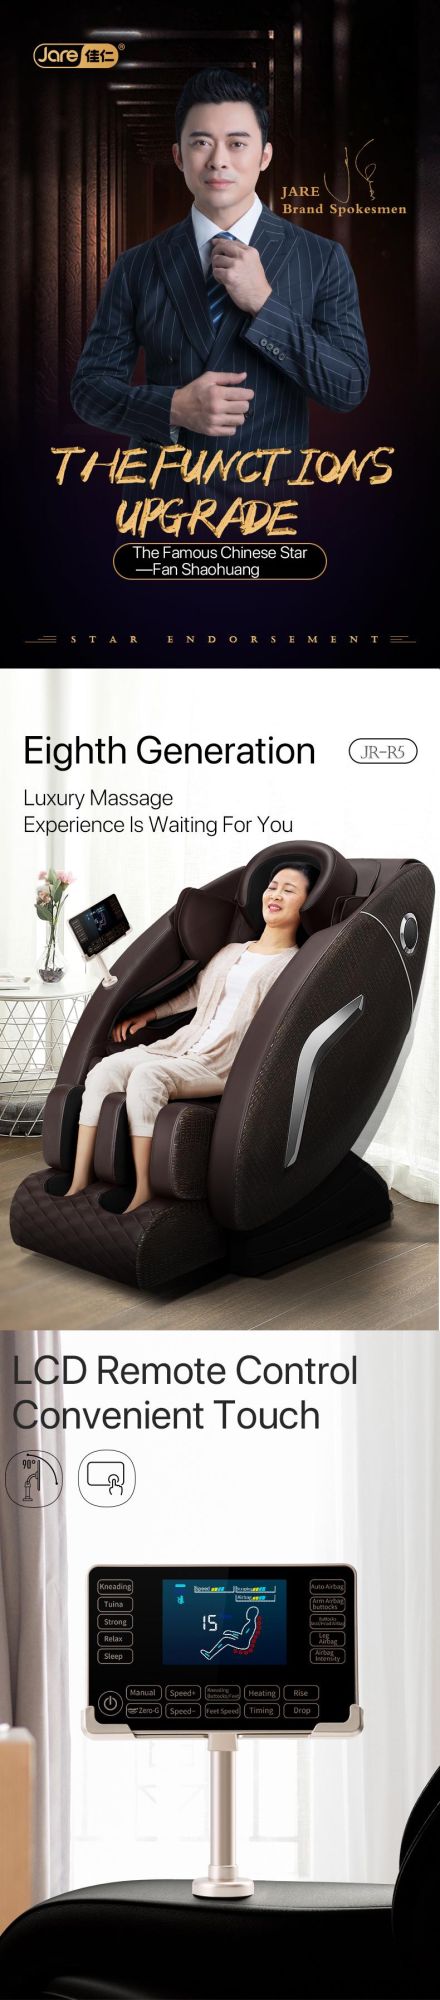 Electric 3D Best Human Touch Best Spine Back Shiatsu Massage Chair